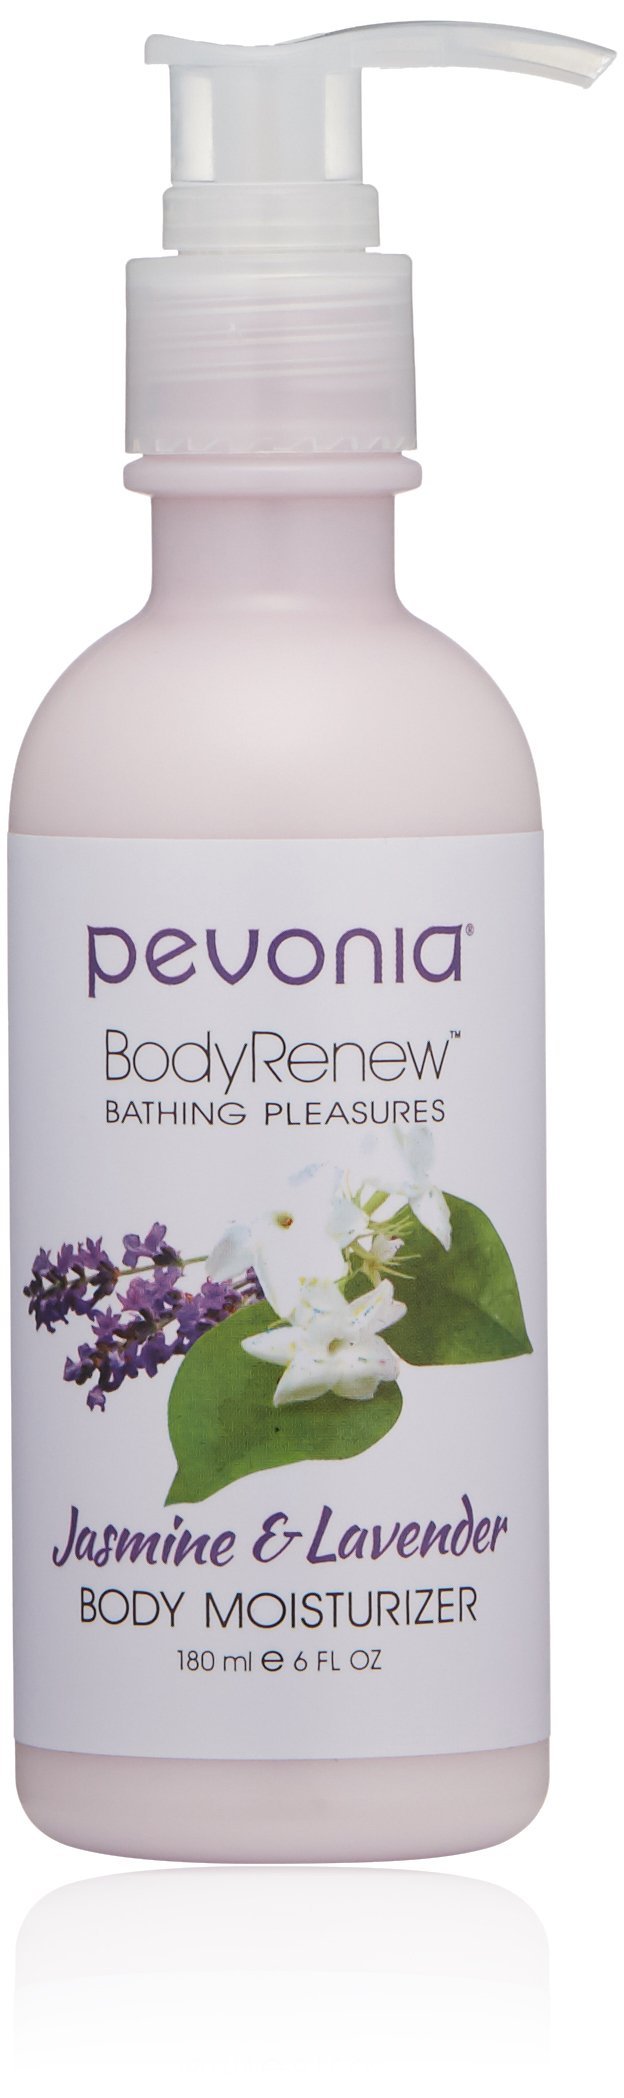 Pevonia BodyRenew Body Moisturizer, Jasmine & Lavender, 6 Fl Oz - BeesActive Australia